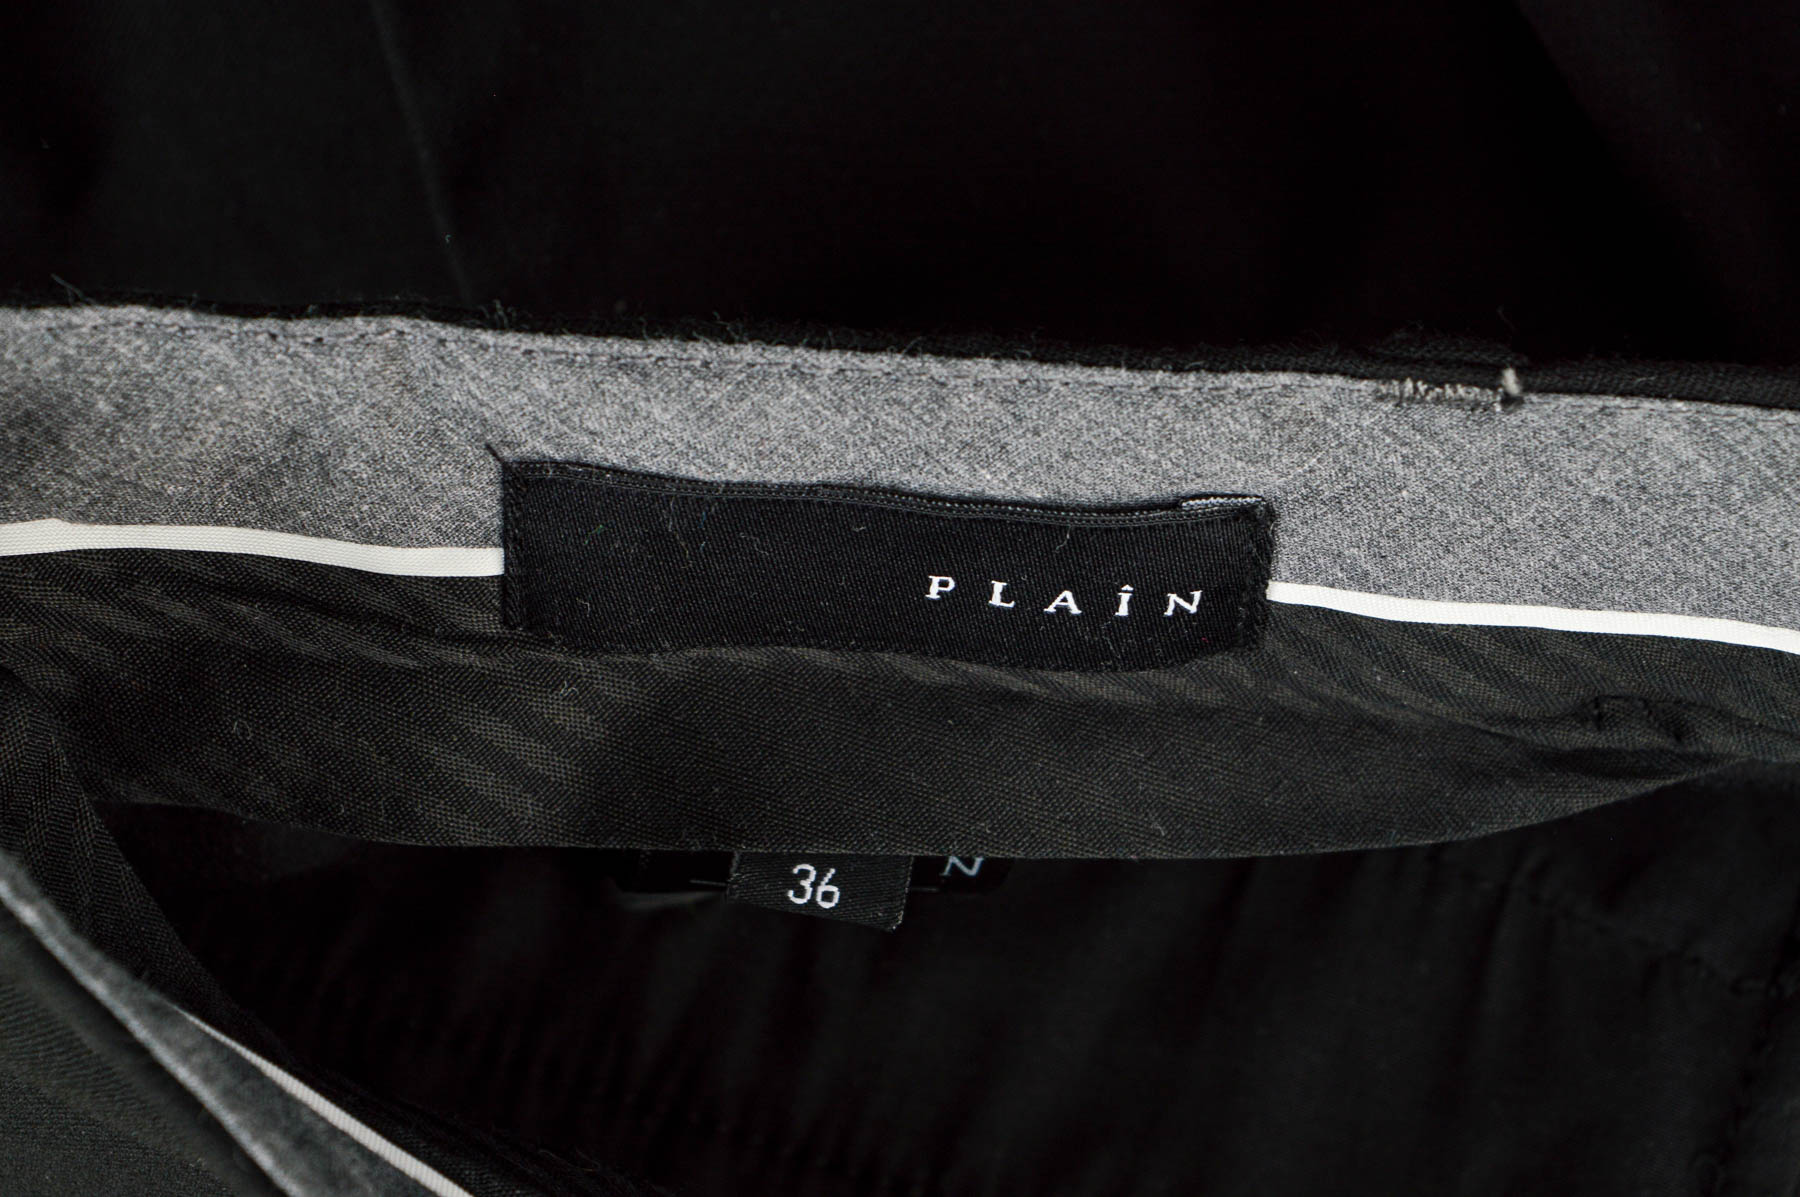 Men's trousers - PLAIN - 2